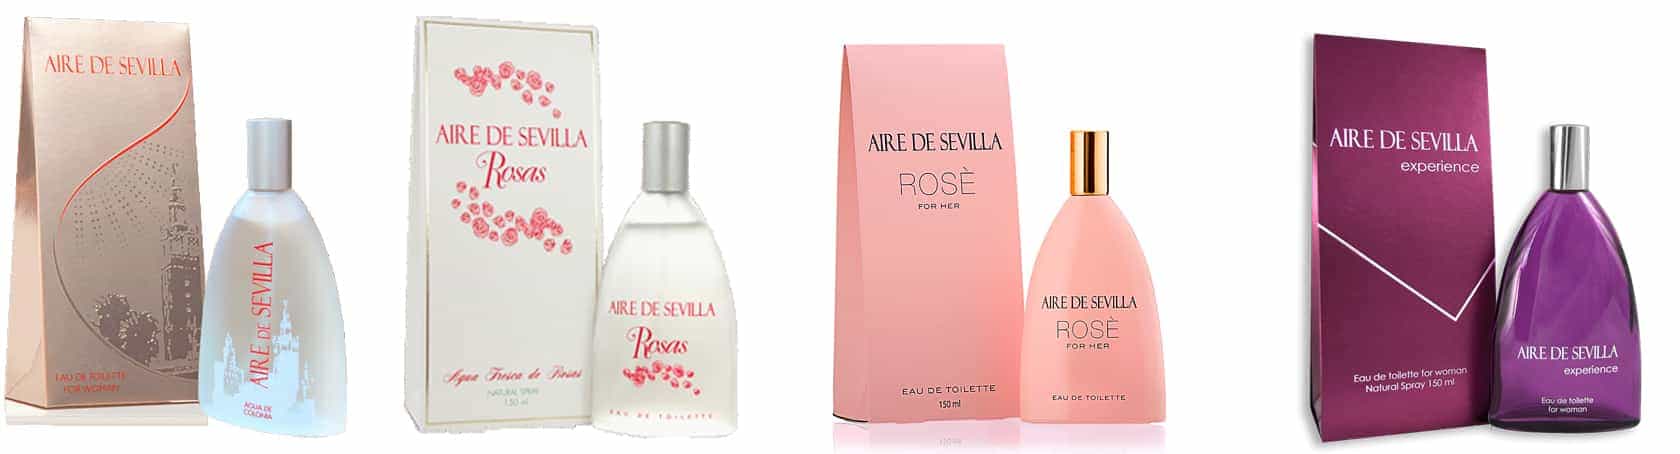 Fragancias Aire de Sevilla, Aire de Sevilla Rosas, Aire de Sevilla Rose y Aire de Sevilla Experience. Eau de Toilette para mujer. Un regalo ideal.